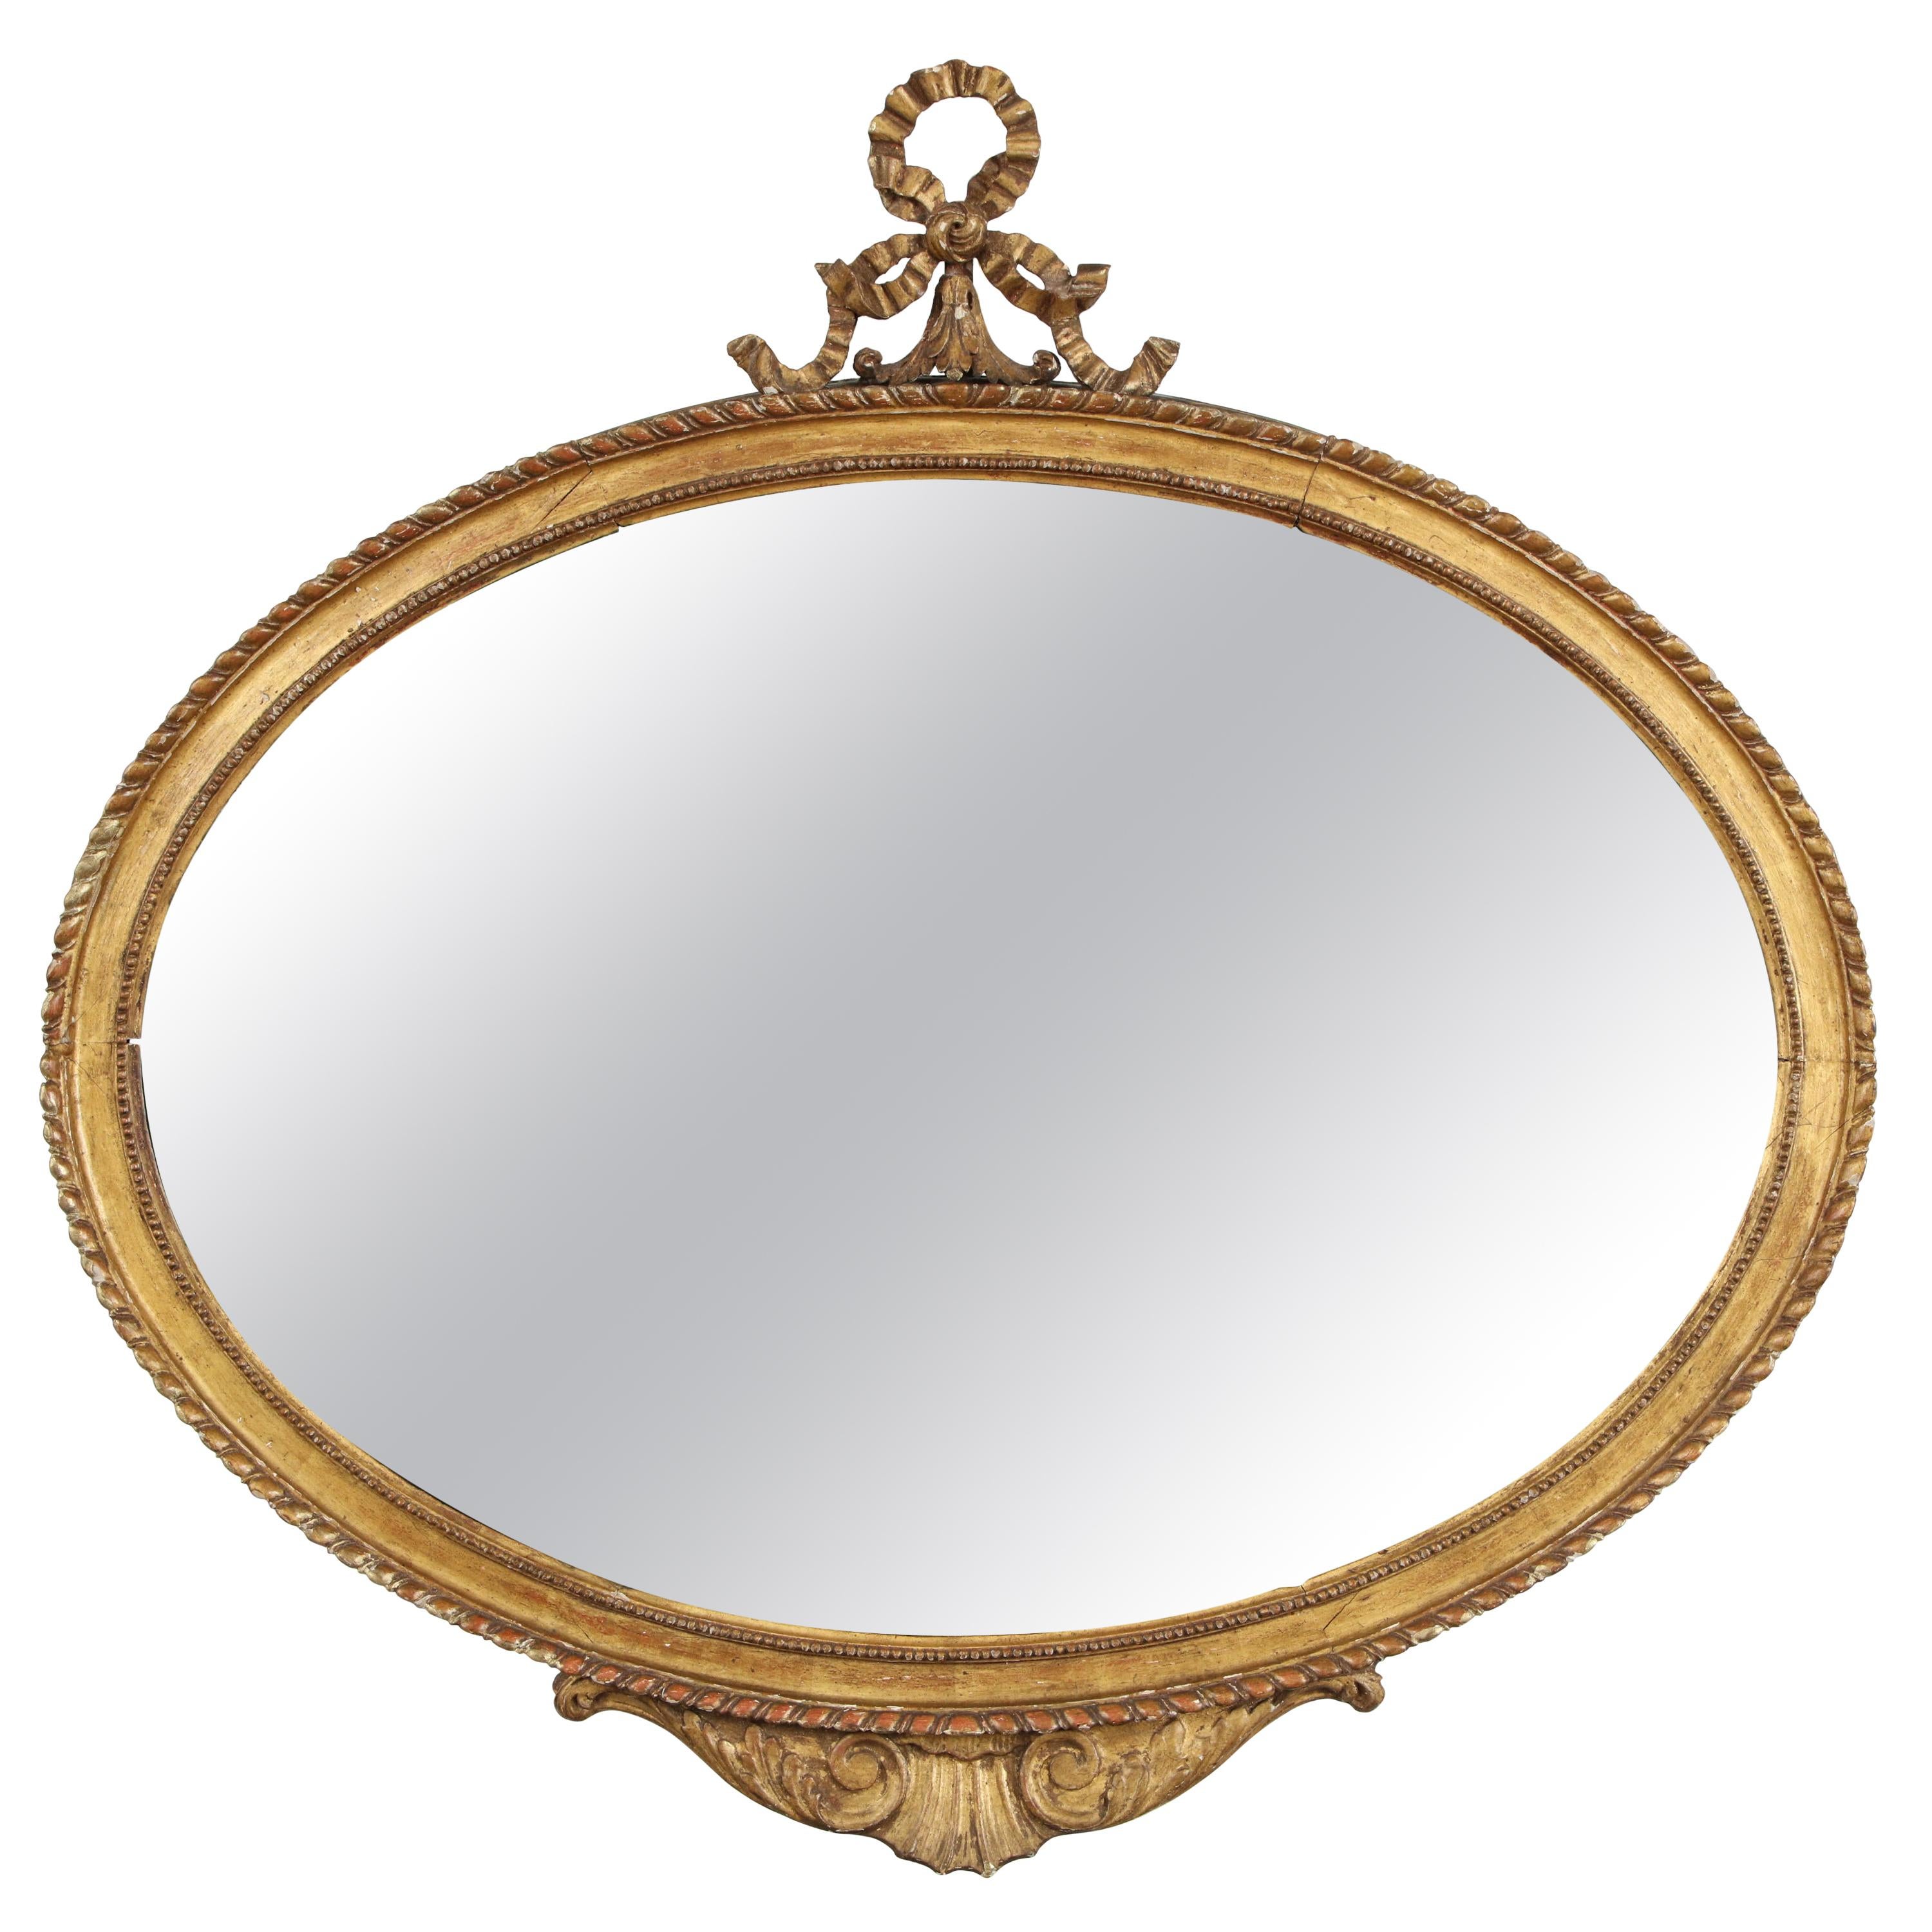 Classical Oval Gilt Mirror